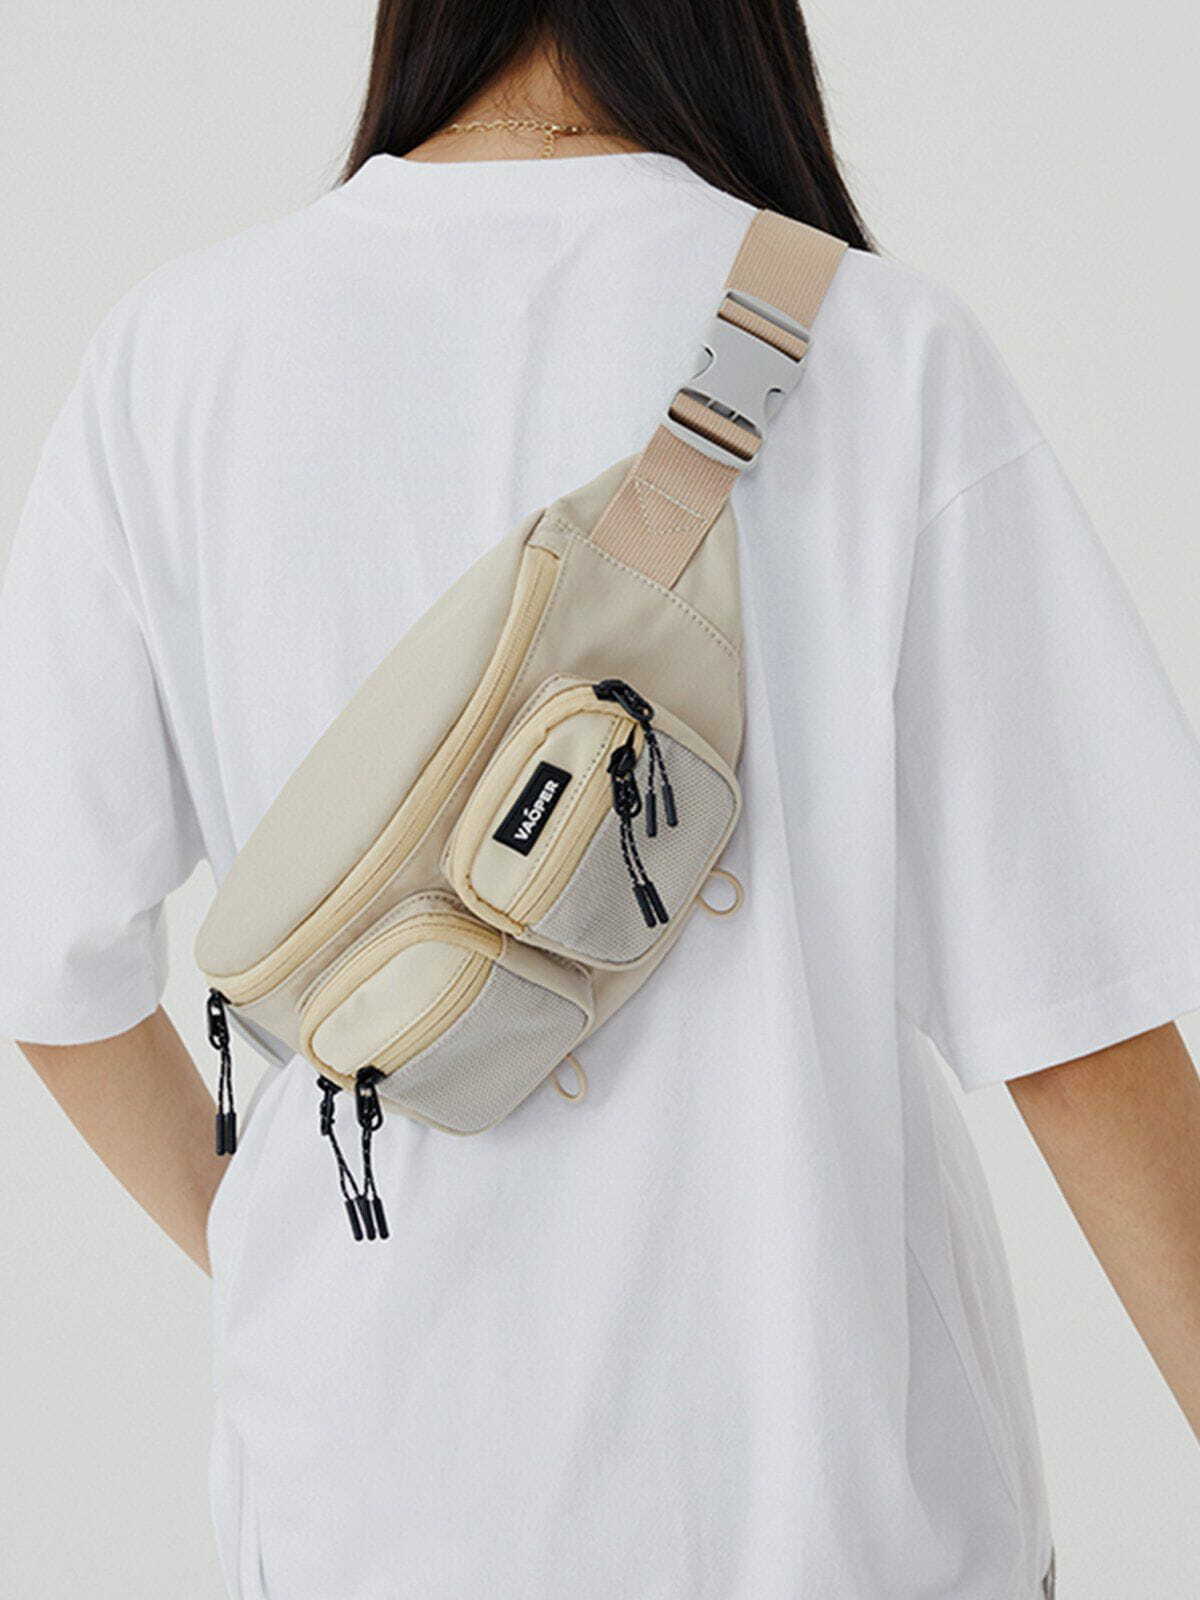 functional crossbody bag chic & edgy streetwear accessory 5860